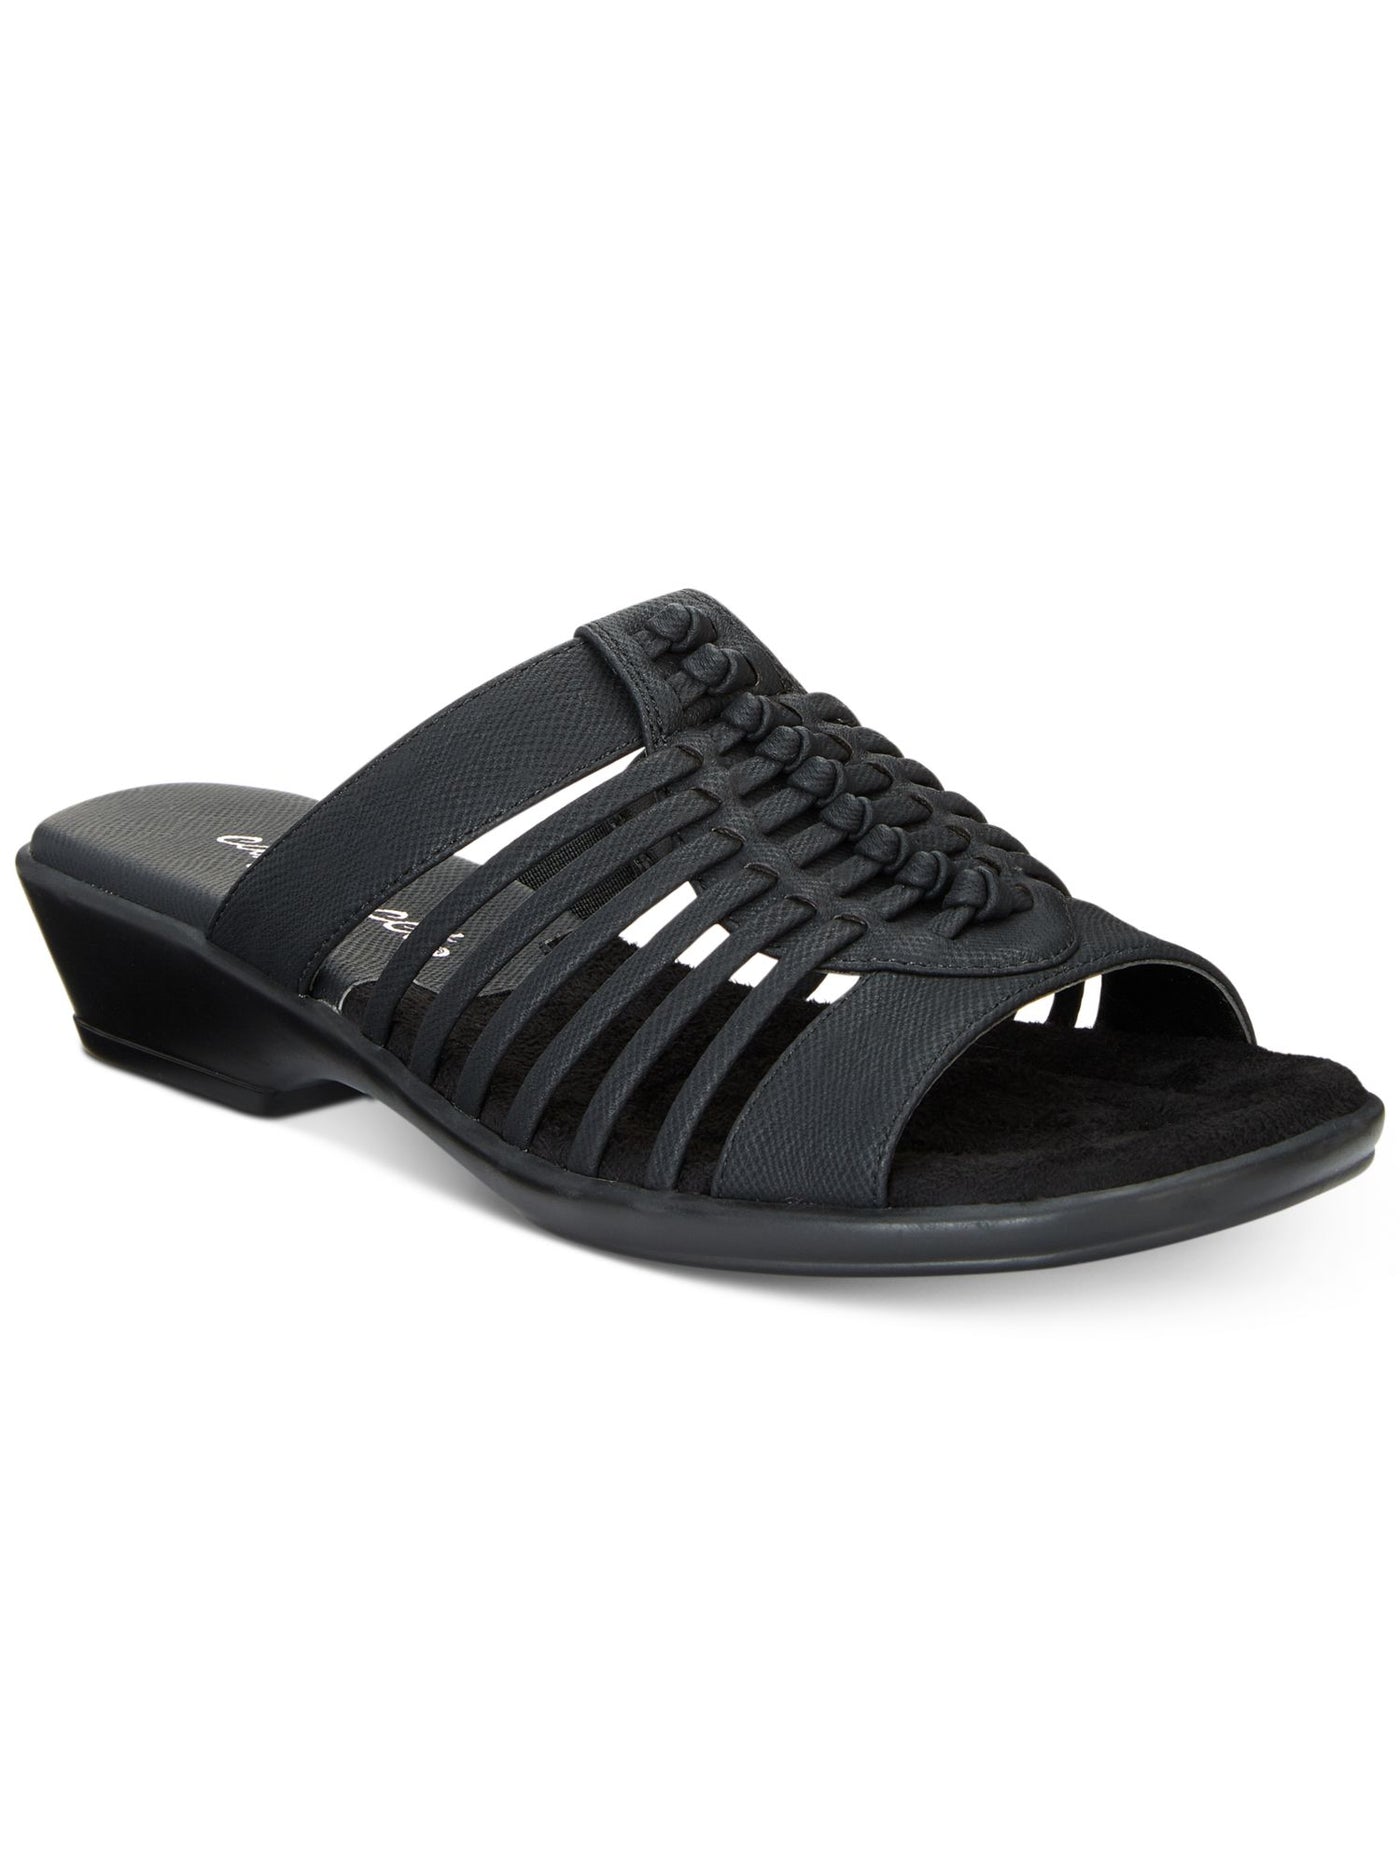 EASY STREET Womens Black Strappy Woven Comfort Stretch Nola Round Toe Block Heel Slip On Slide Sandals Shoes 6.5 WW